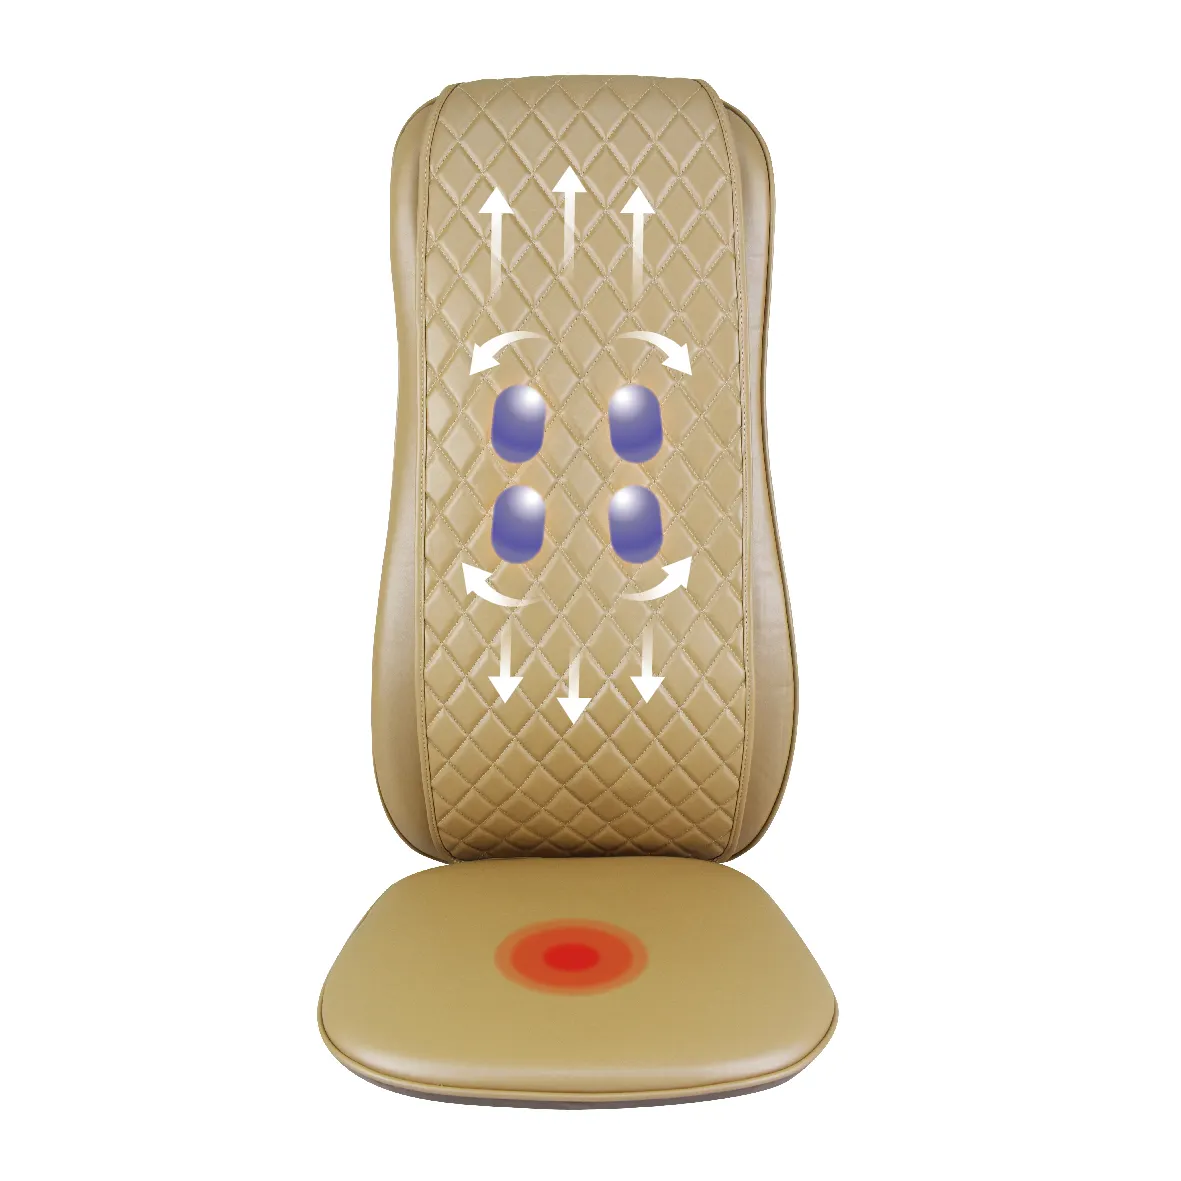 Portable Comfortable Heat Shiatsu infrared Vibrating Sofa Bed Massage Cushion With Heating